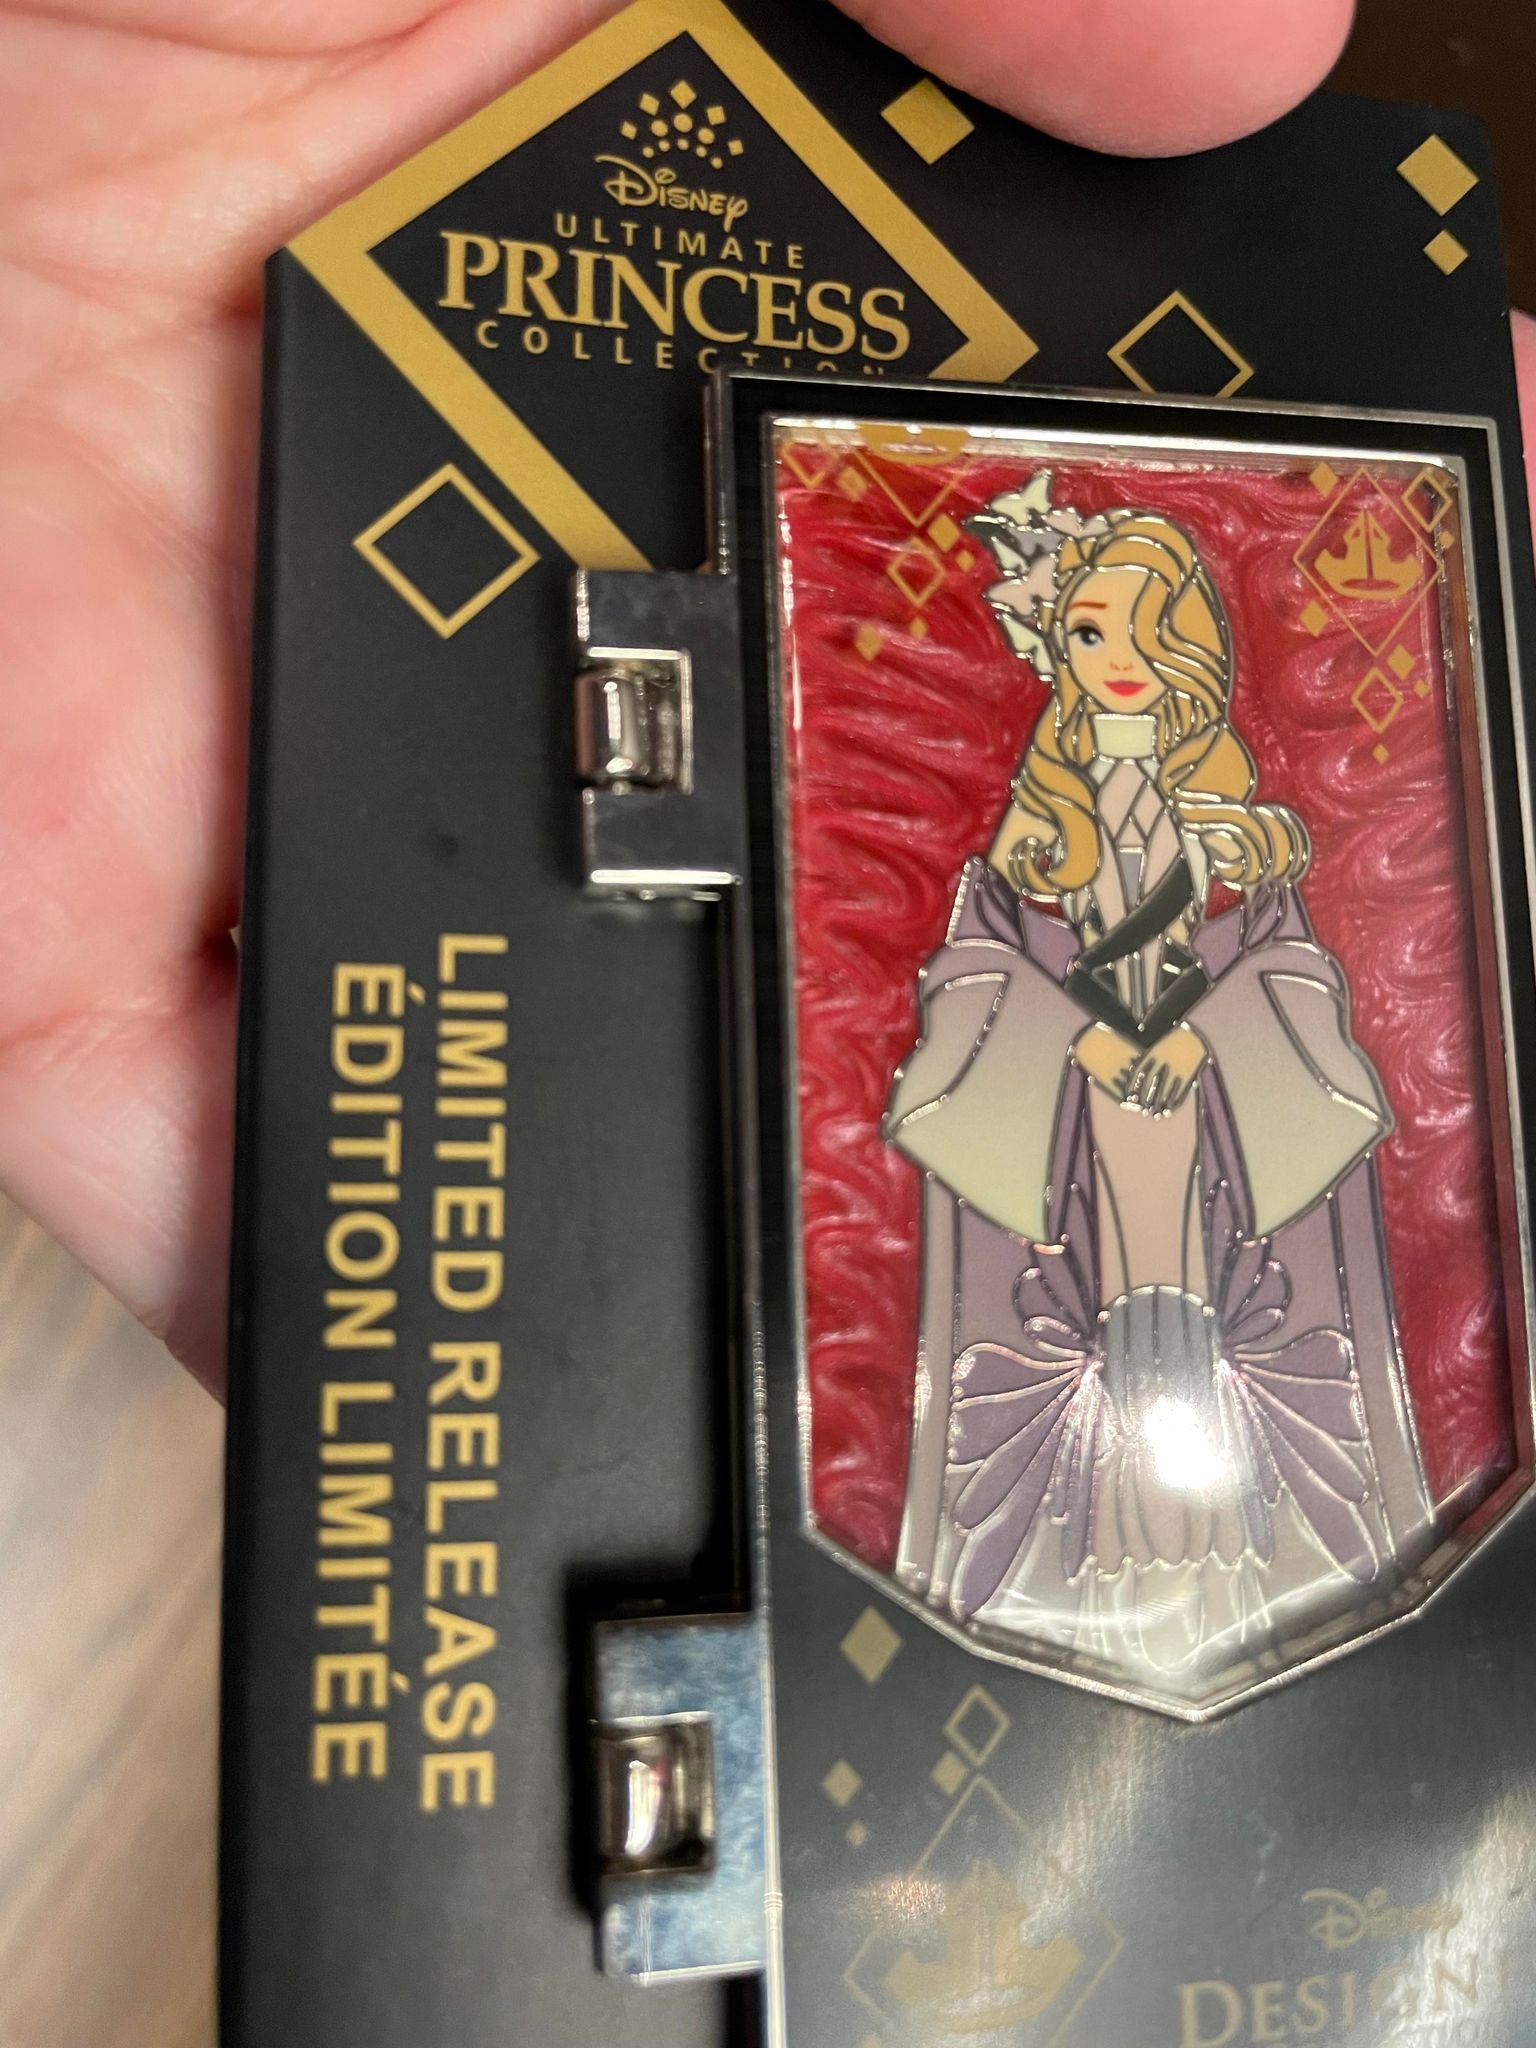 briar rose princess collection designer pin